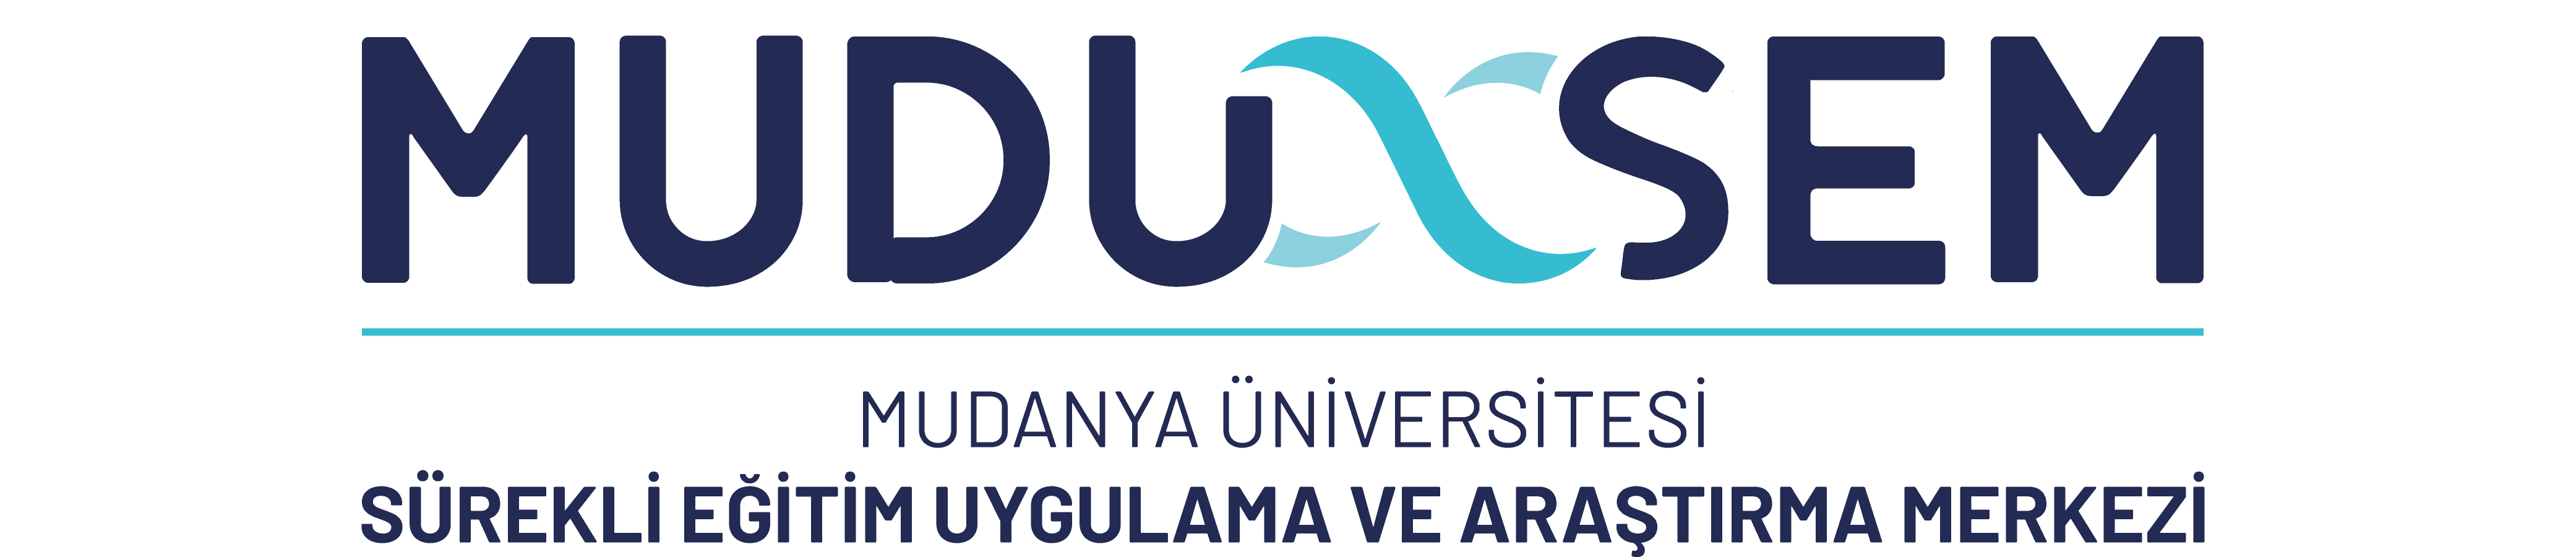 Mudanya Üniversitesi